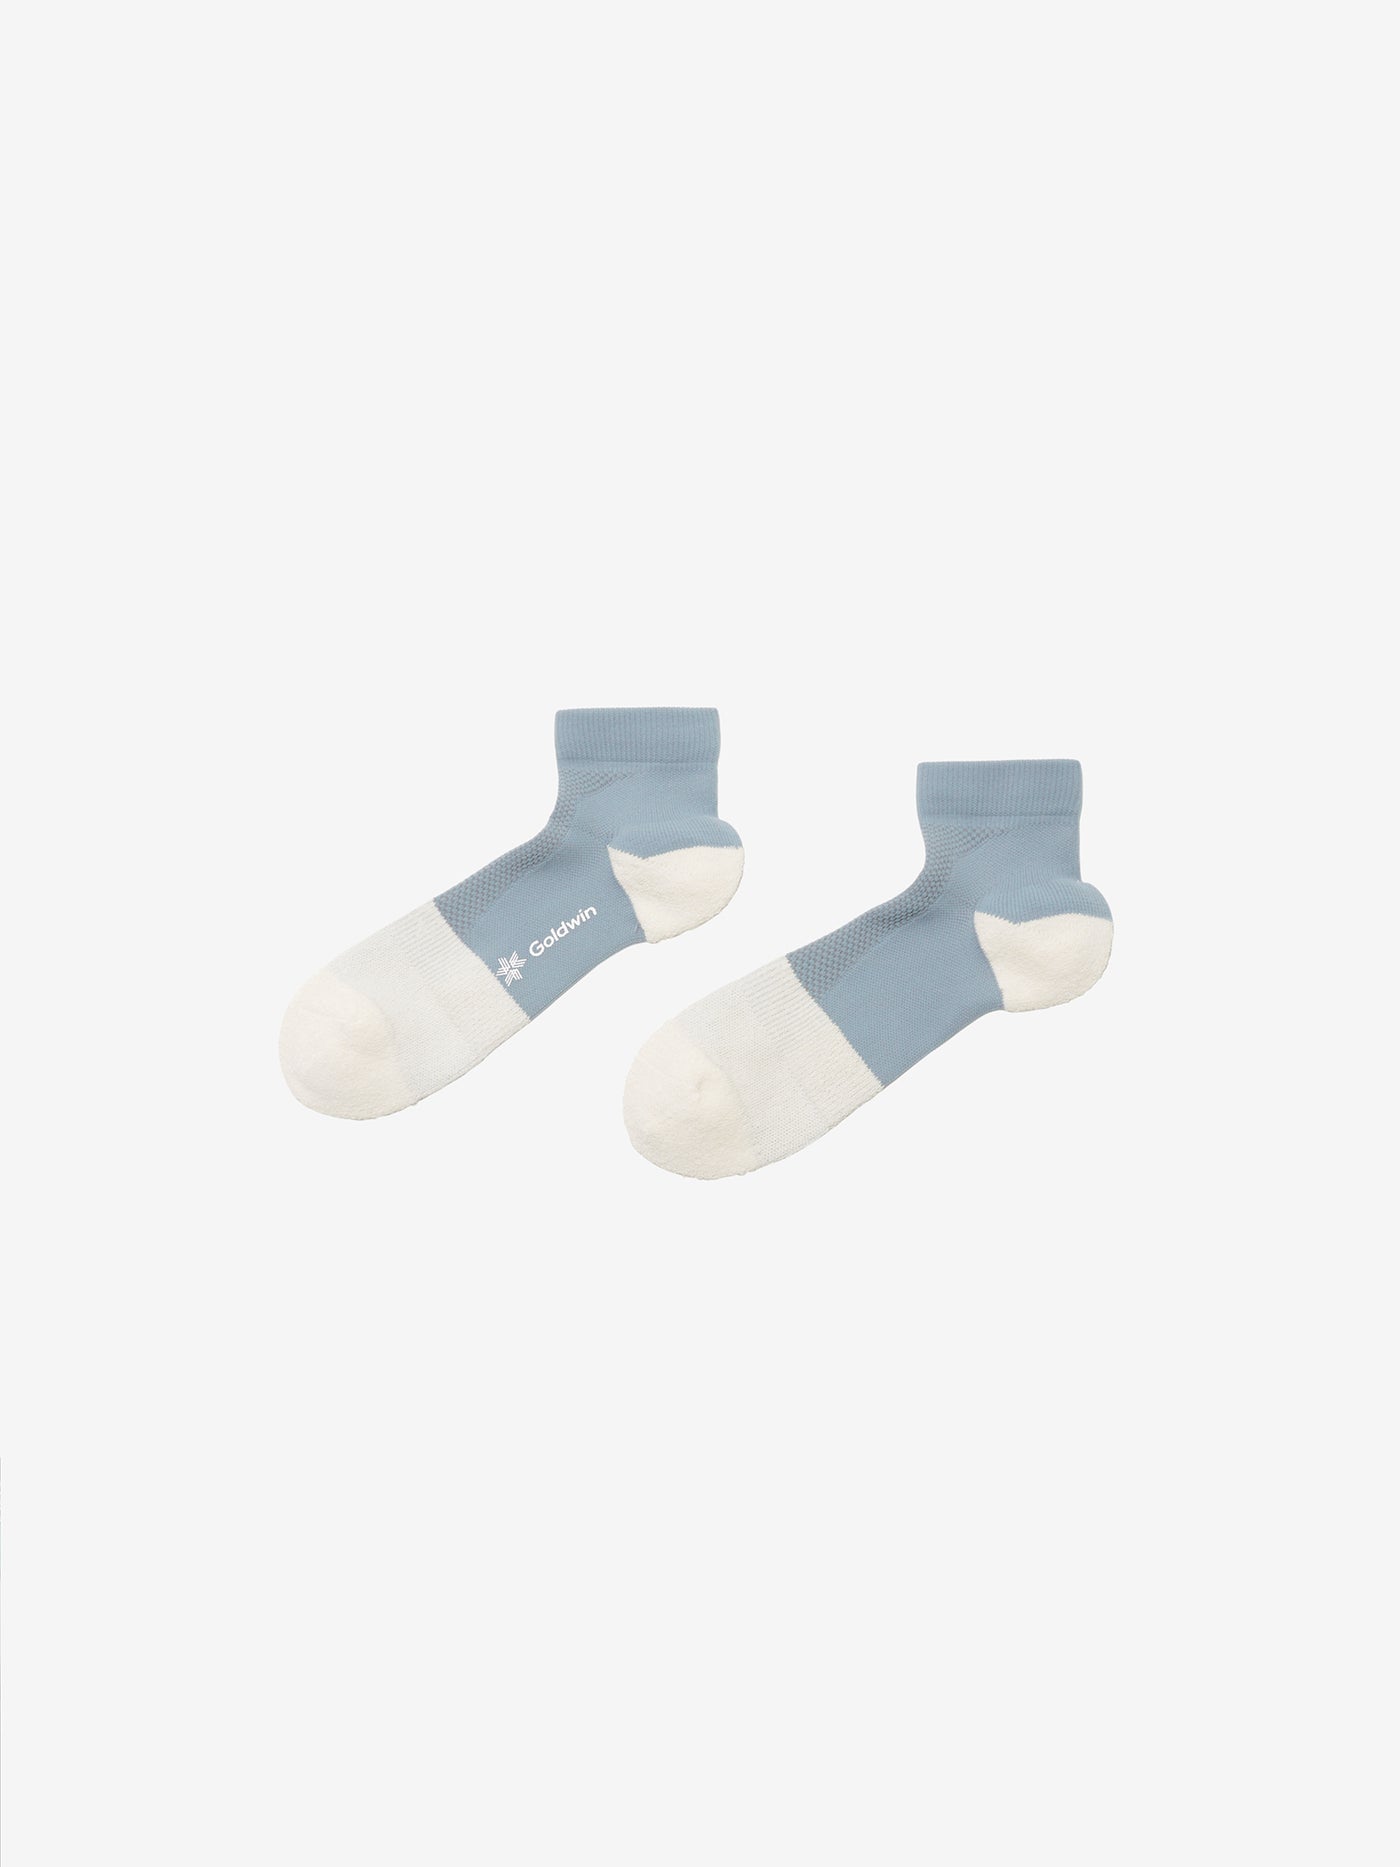 Paper Fiber C3fit Arch Support Pile Socks